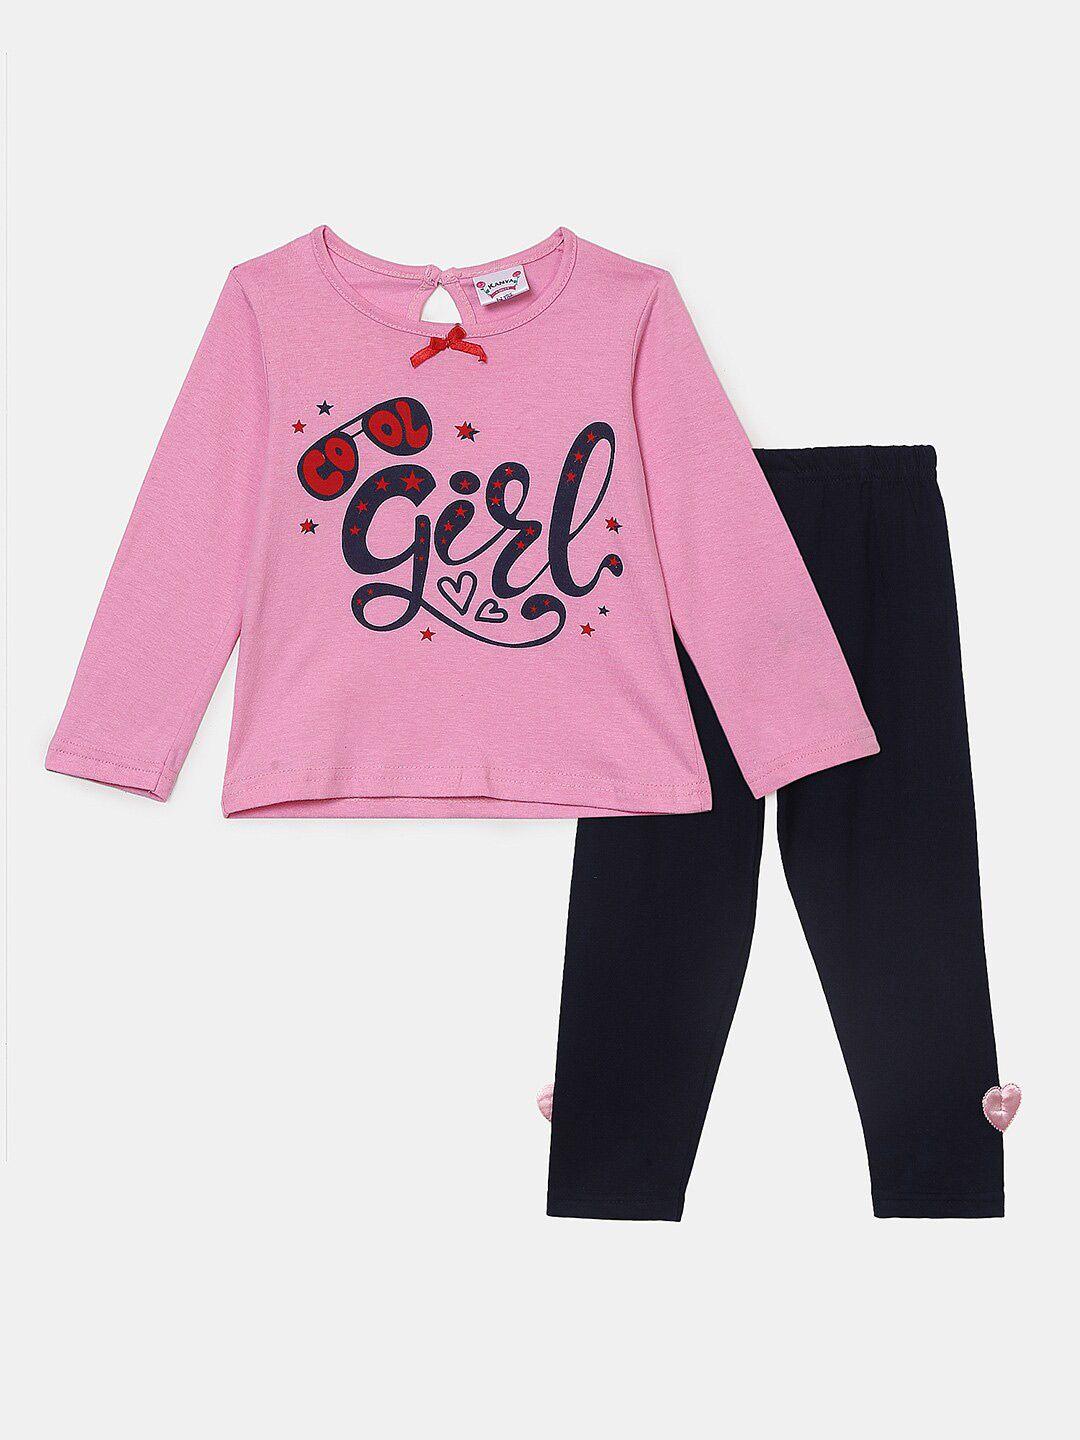 v-mart girls pink & black printed pure cotton top with pyjamas